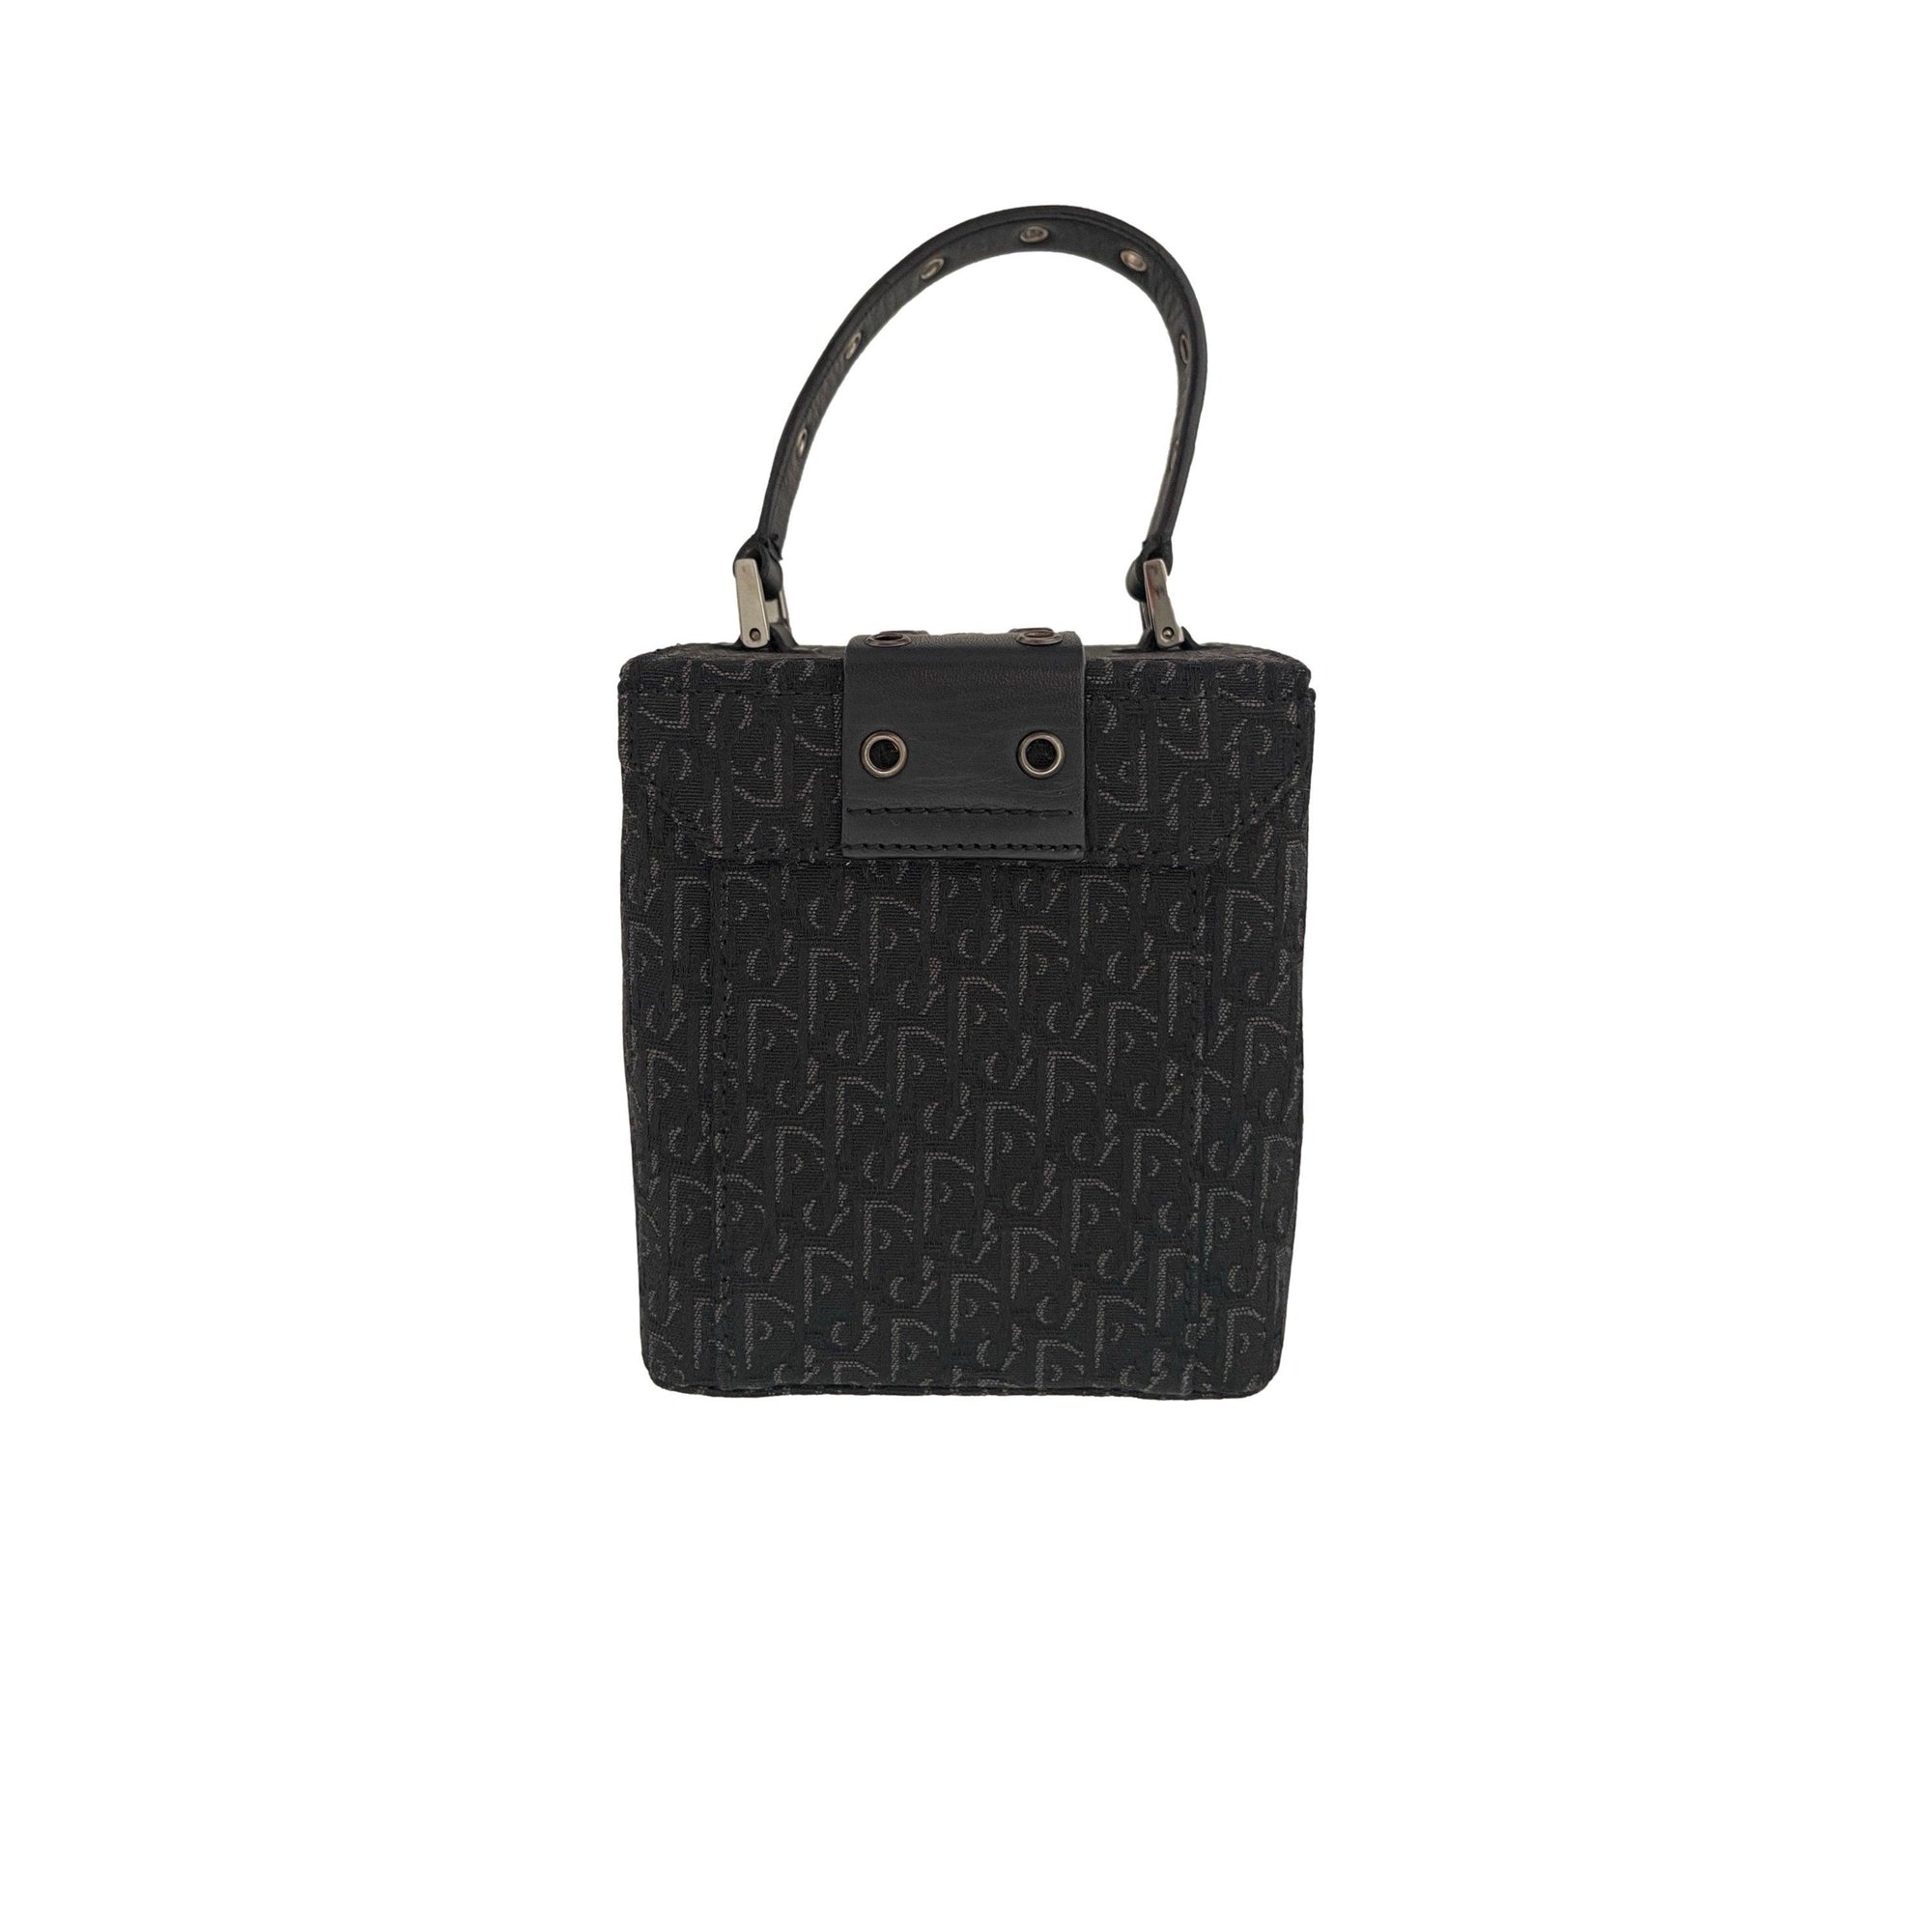 Dior Black Mini Logo Box Bag - Handbags